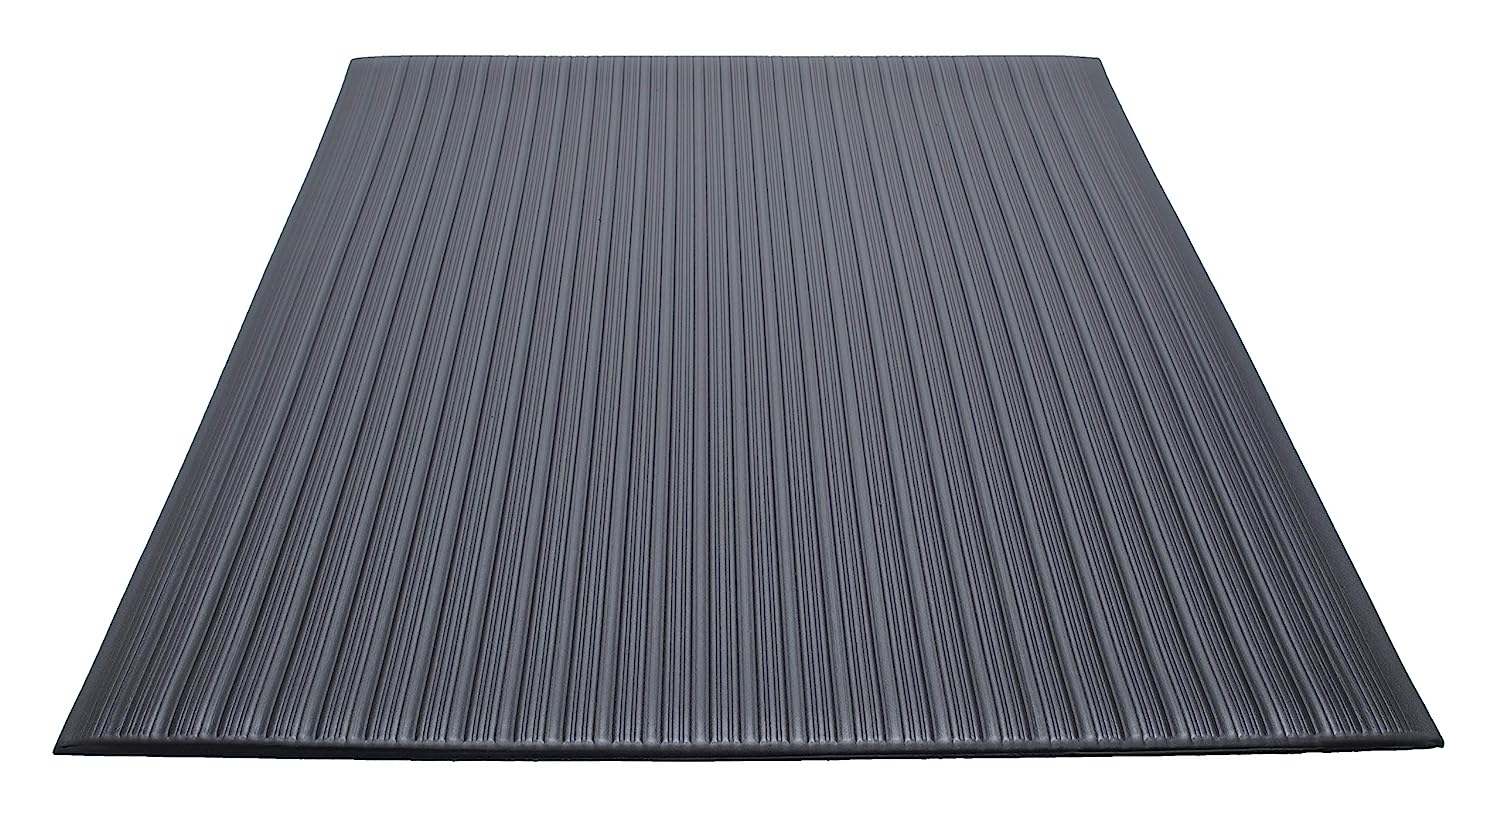 Guardian 24046002 Air Step Anti-Fatigue Floor Mat, Vinyl, 4'x60', Black - $300